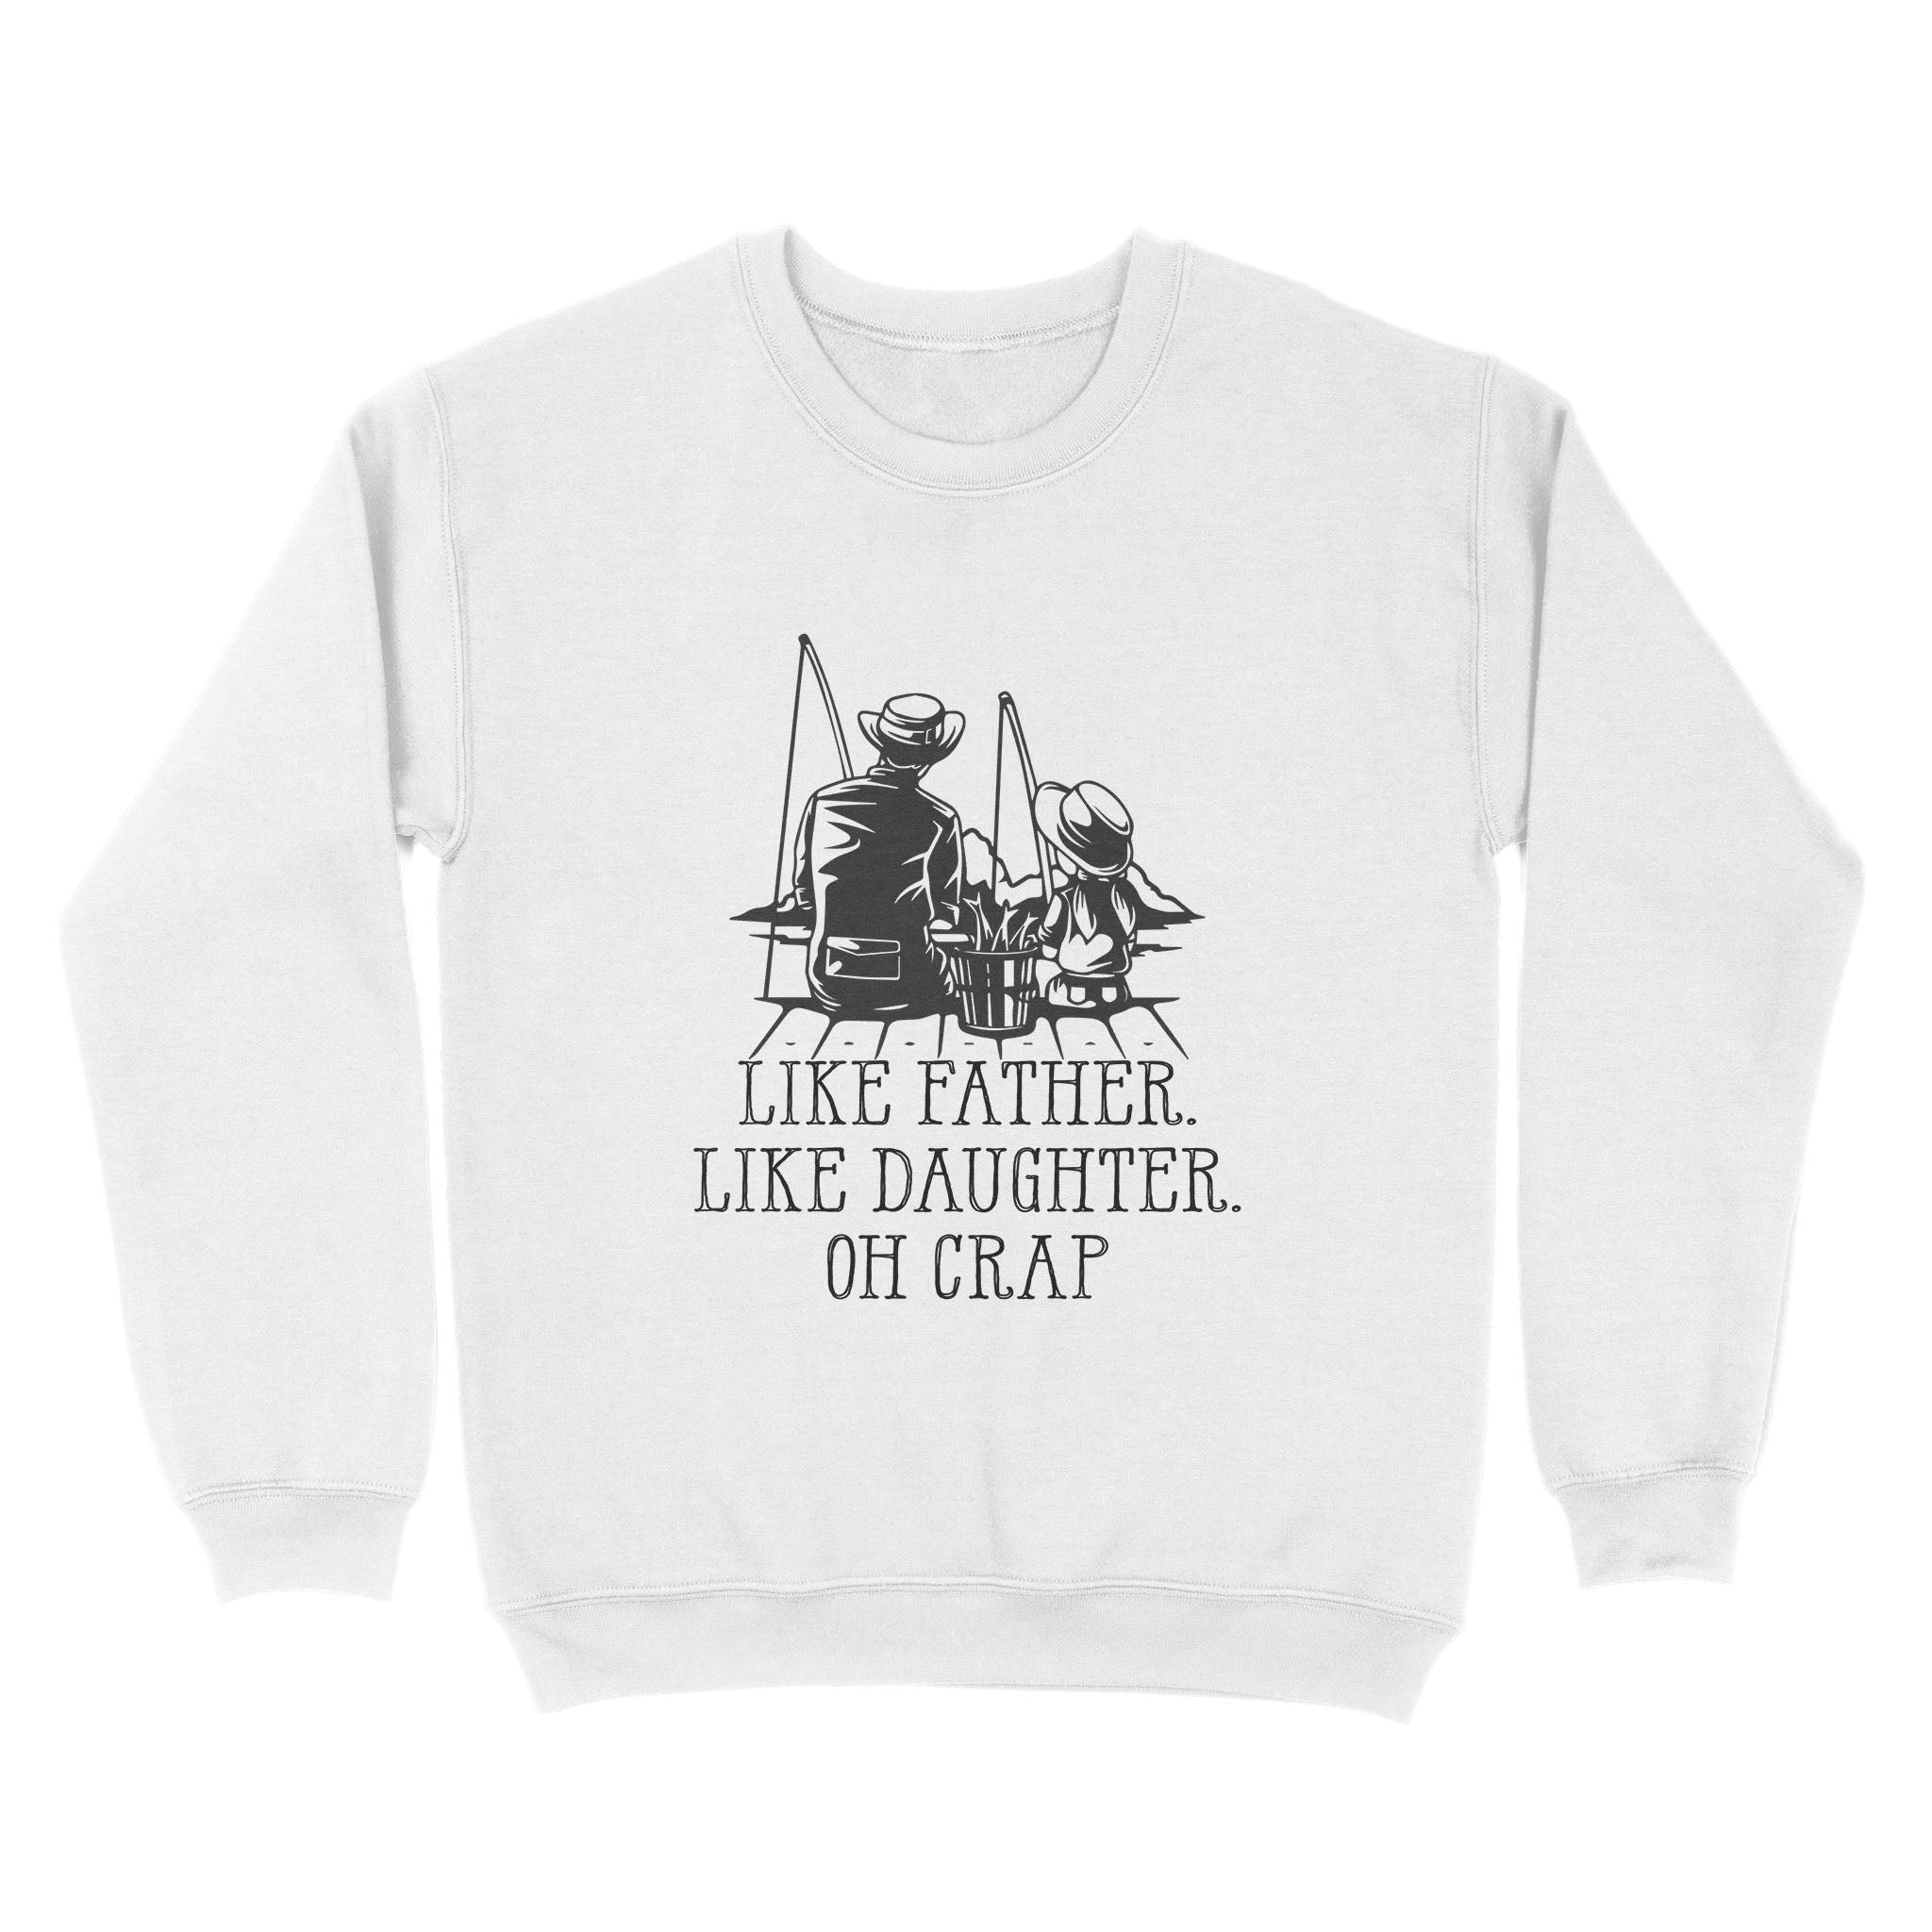 Like Father Like Daughter Fishing Sweatshirt, Daughter Gift For Dad Love Fishing Shirt TN30